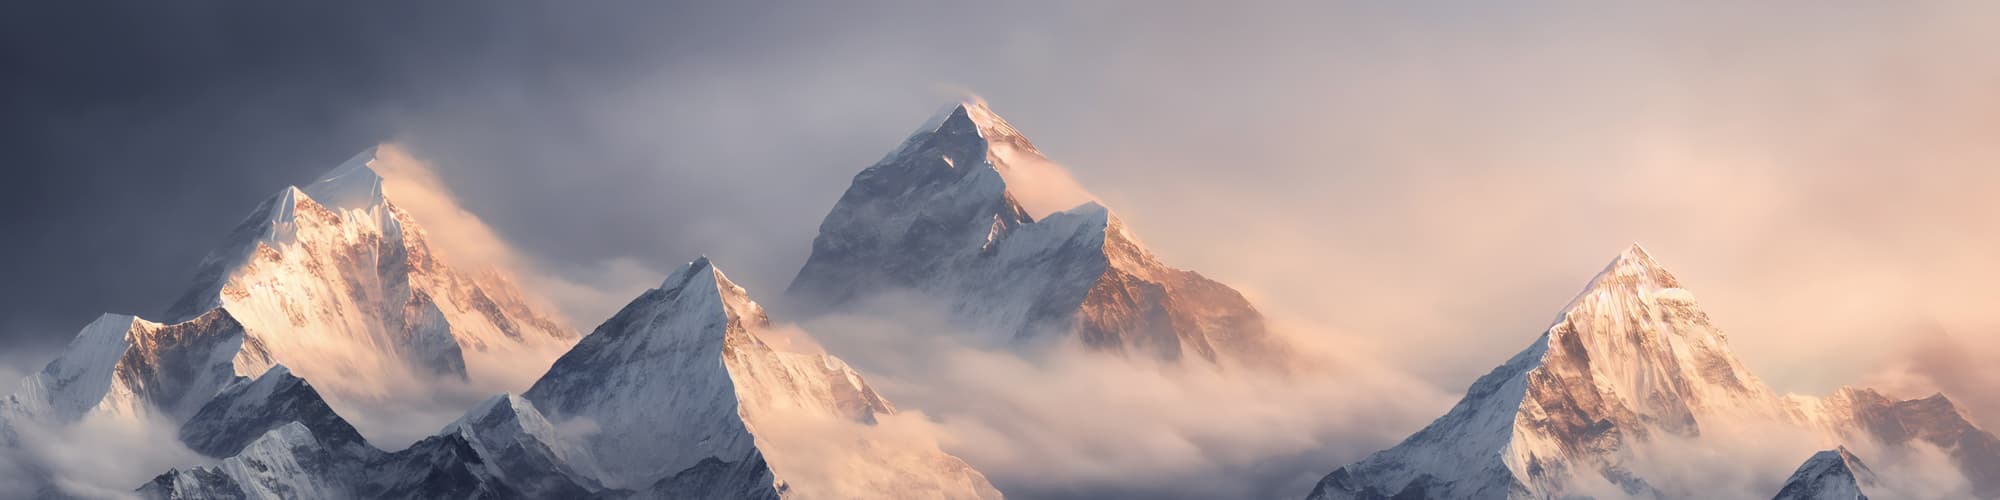 Trekking Everest : trek, circuit et voyage © Josh / Adobe Stock